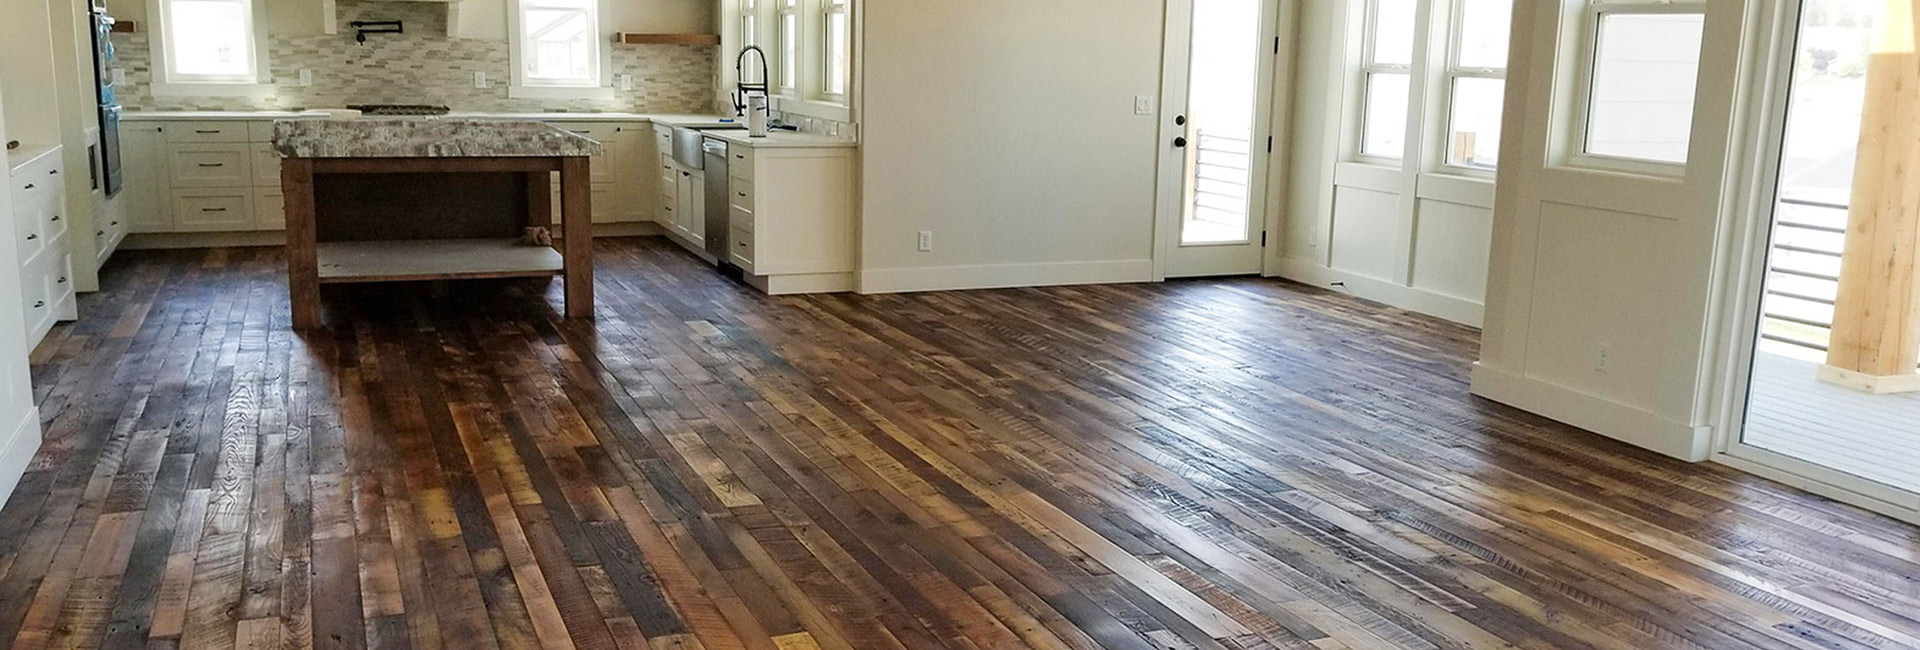 Hardwood Flooring Services, Hardwood Floor Refinishing Boise Idaho